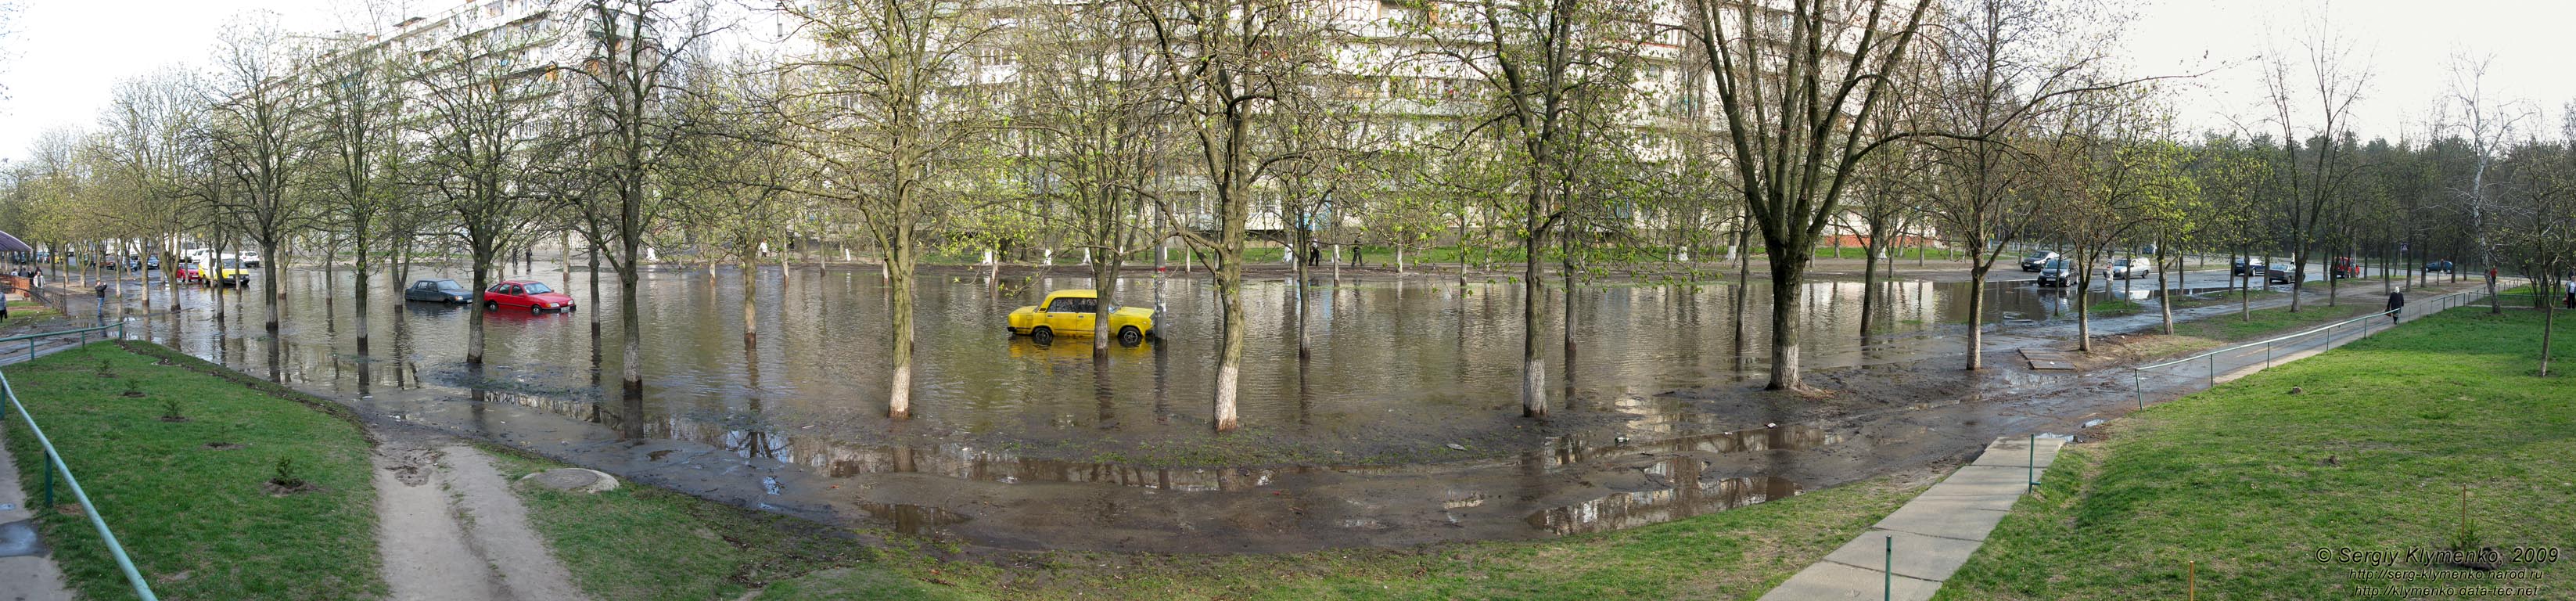 Фото Киева. Затопленная улица академика Курчатова (панорама ~120°), 15 апреля 2009 года.